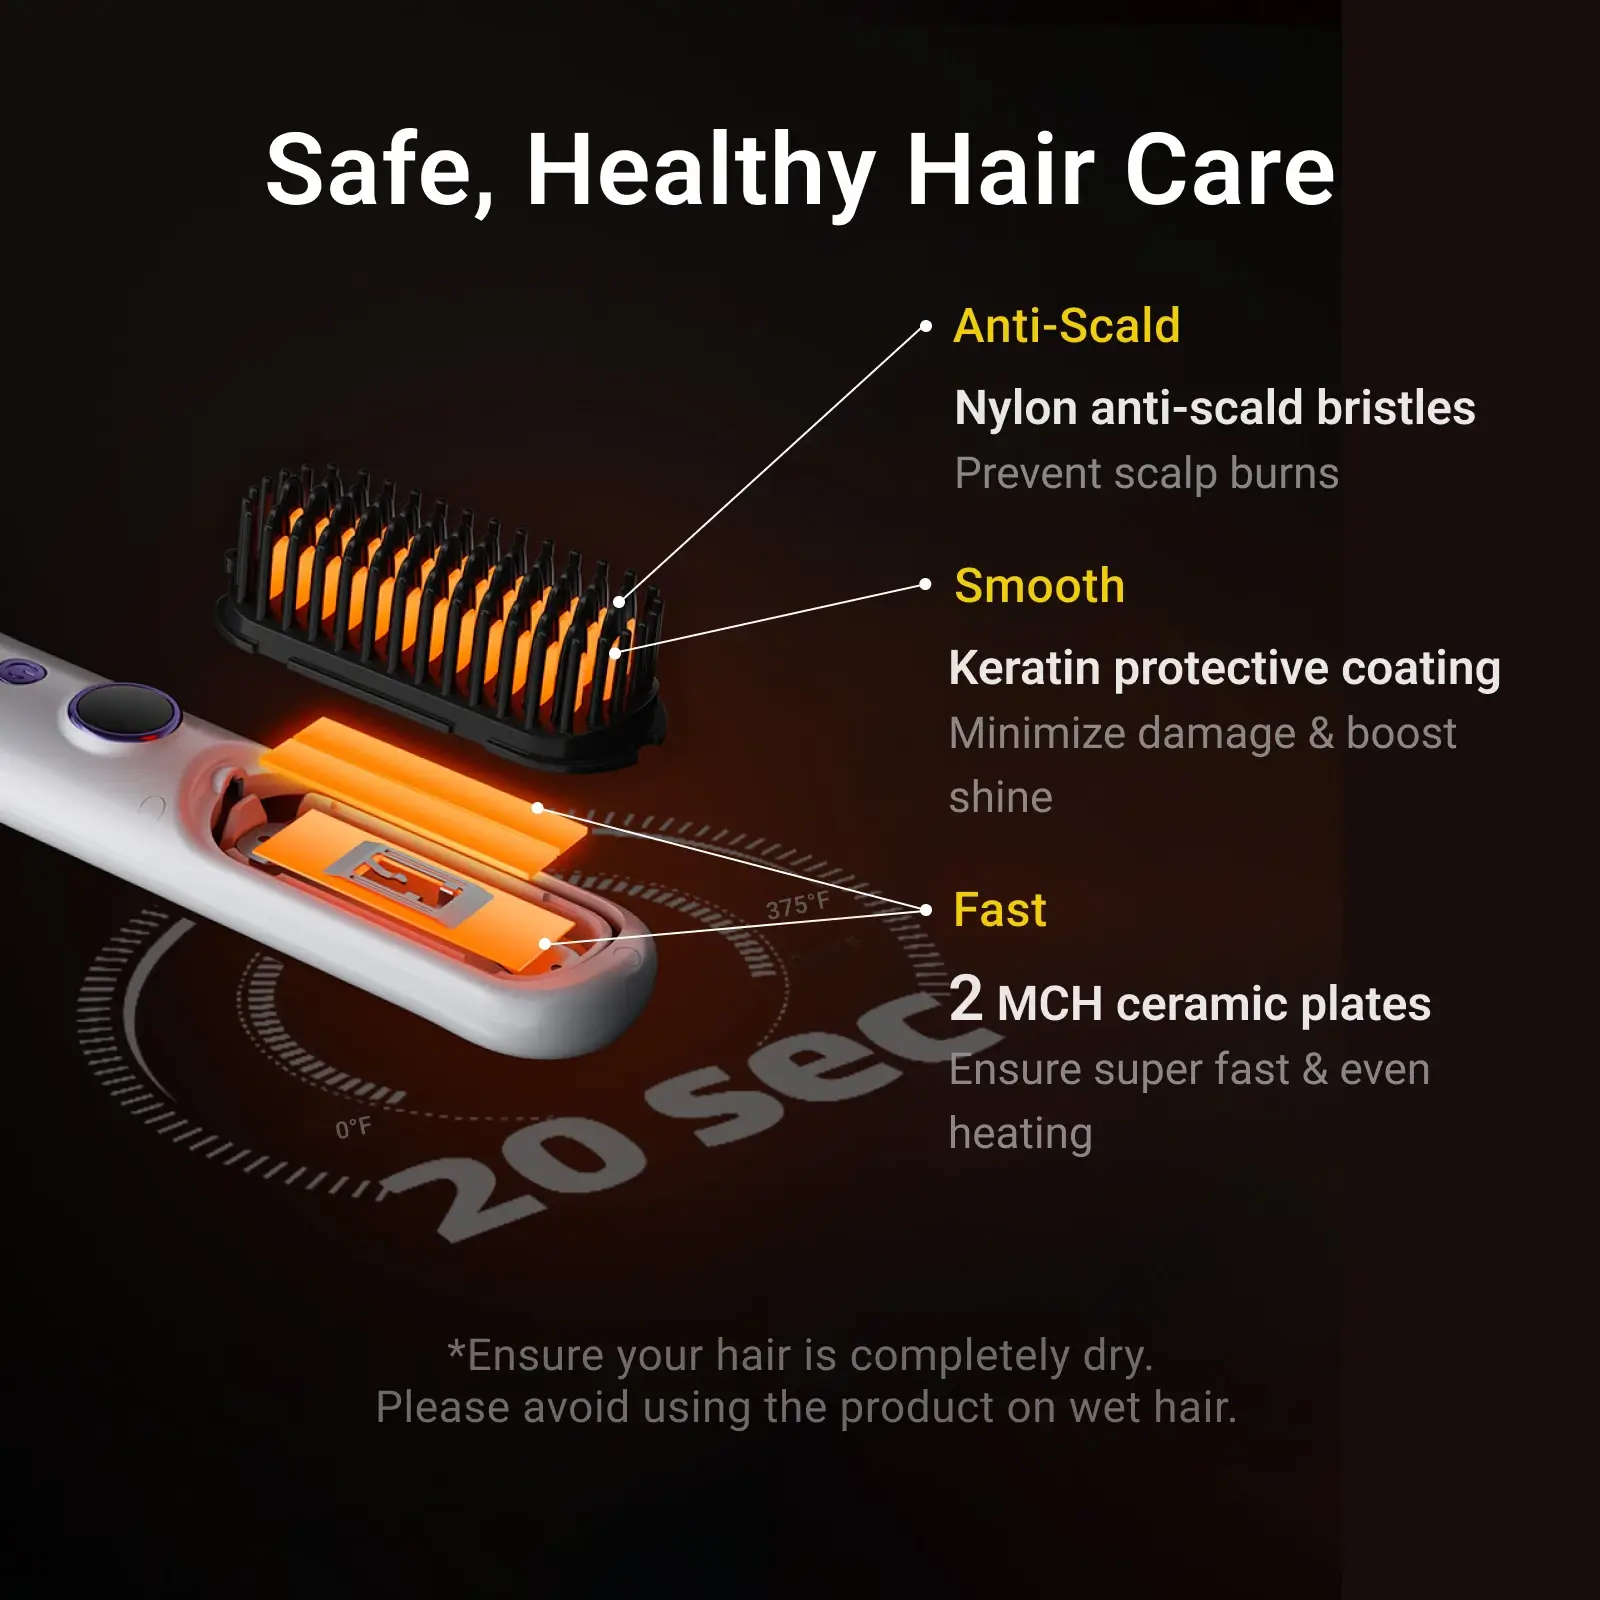 xCool GoFlow 3-in-1 Cordless Hair Straightening Brush, Curling Iron